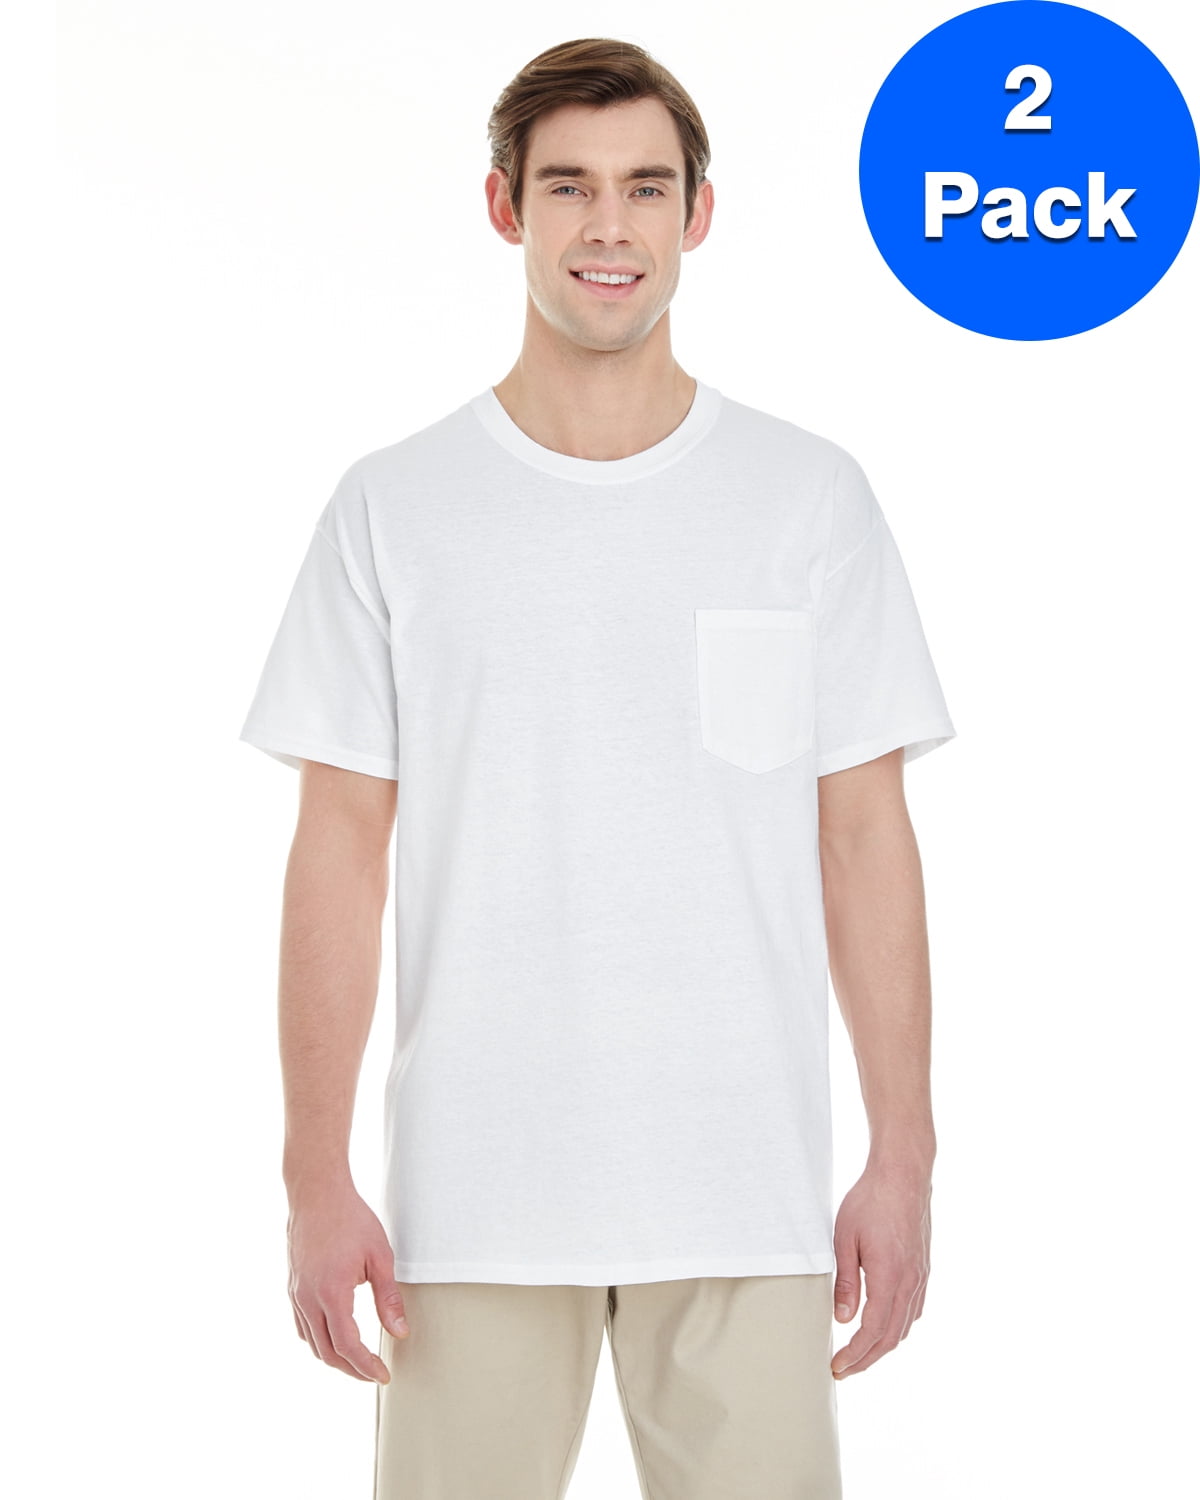 Mens Heavy Cotton T-Shirt with a Pocket 2 Pack - Walmart.com